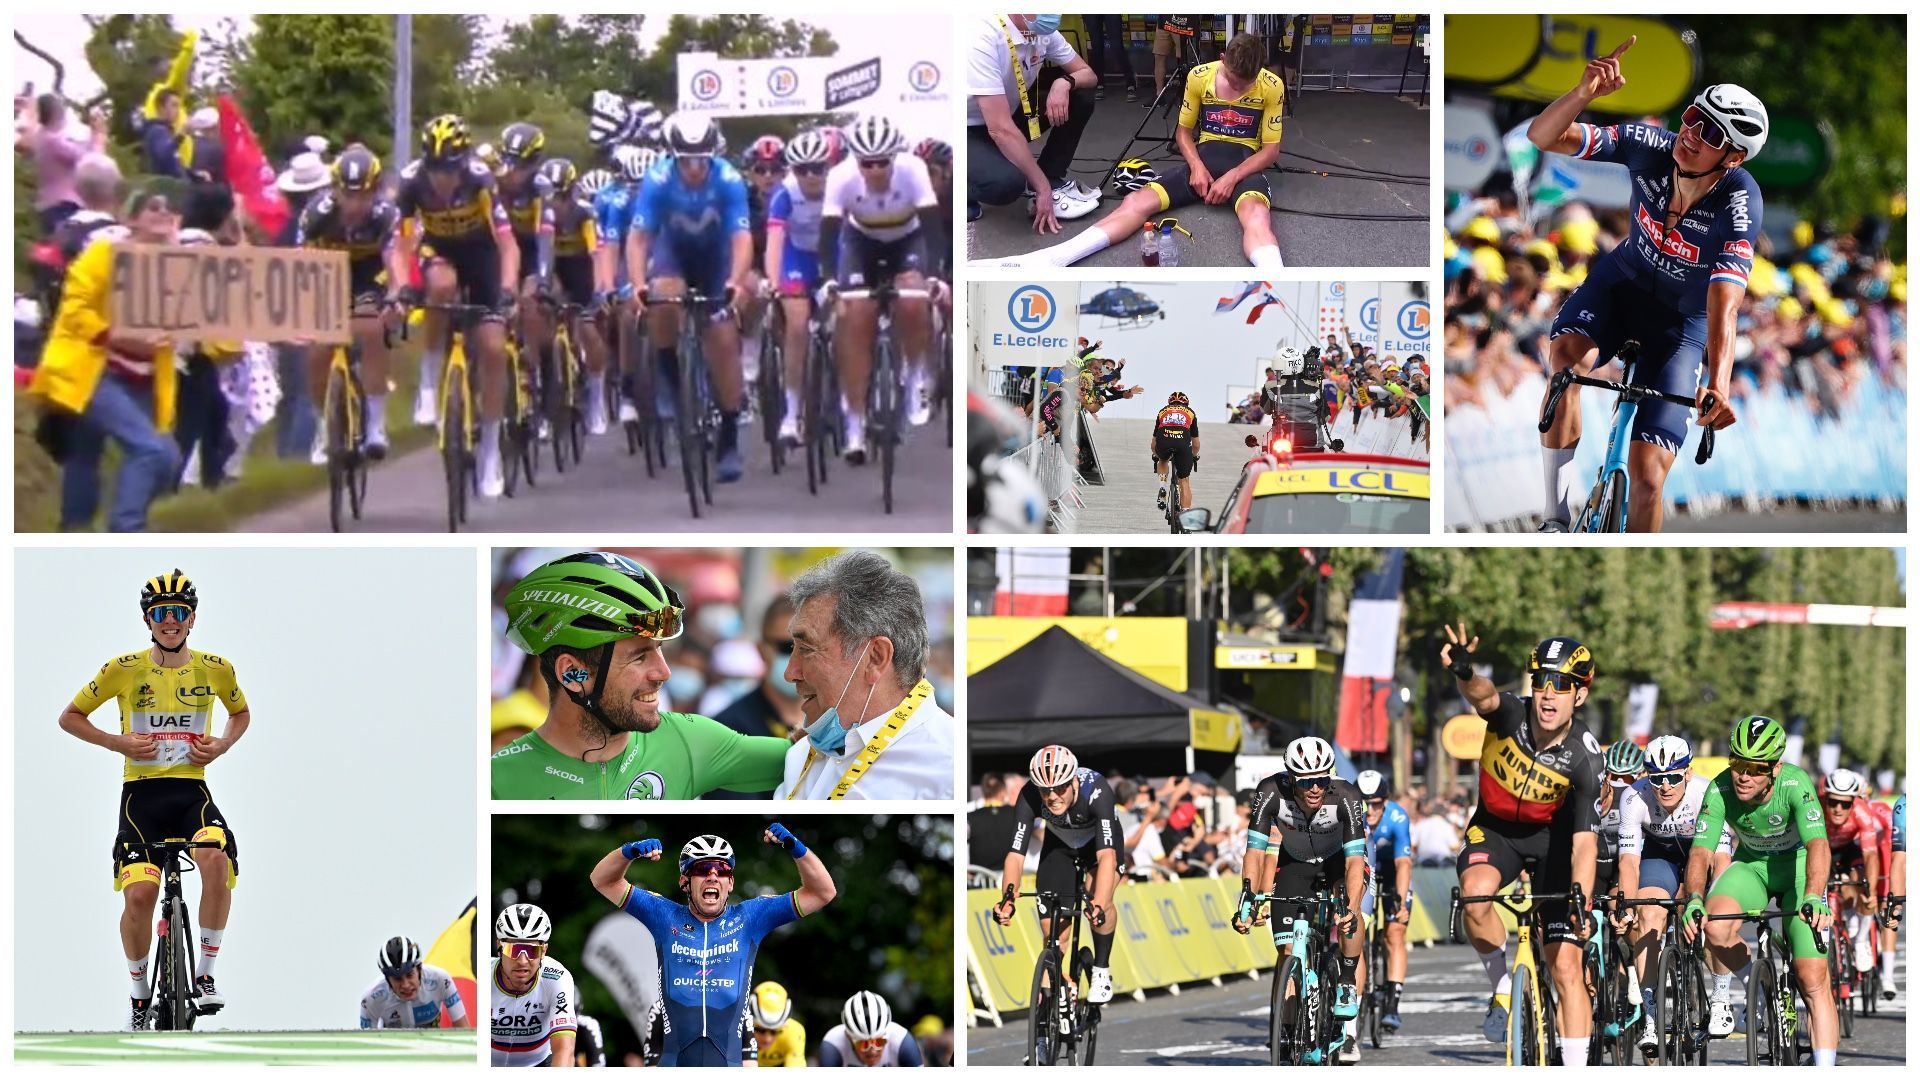 Opi-Omi, les larmes de van der Poel, les exploits de van Aert et Pogacar : le Tour de France en 10 images marquantes